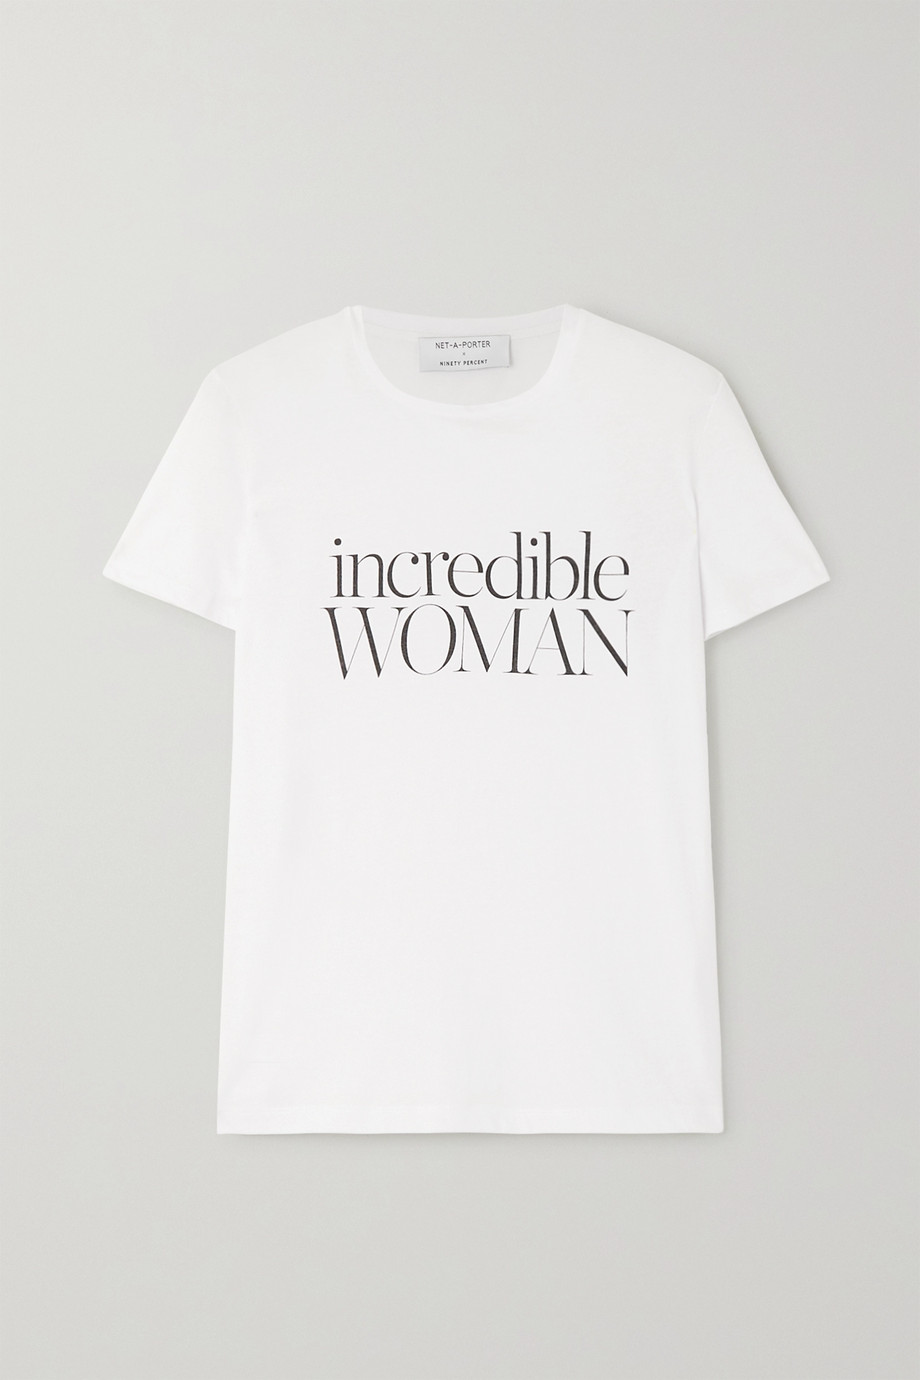 Net-a-Porter x Ninety Percent International Women's Day T-shirt 2020.